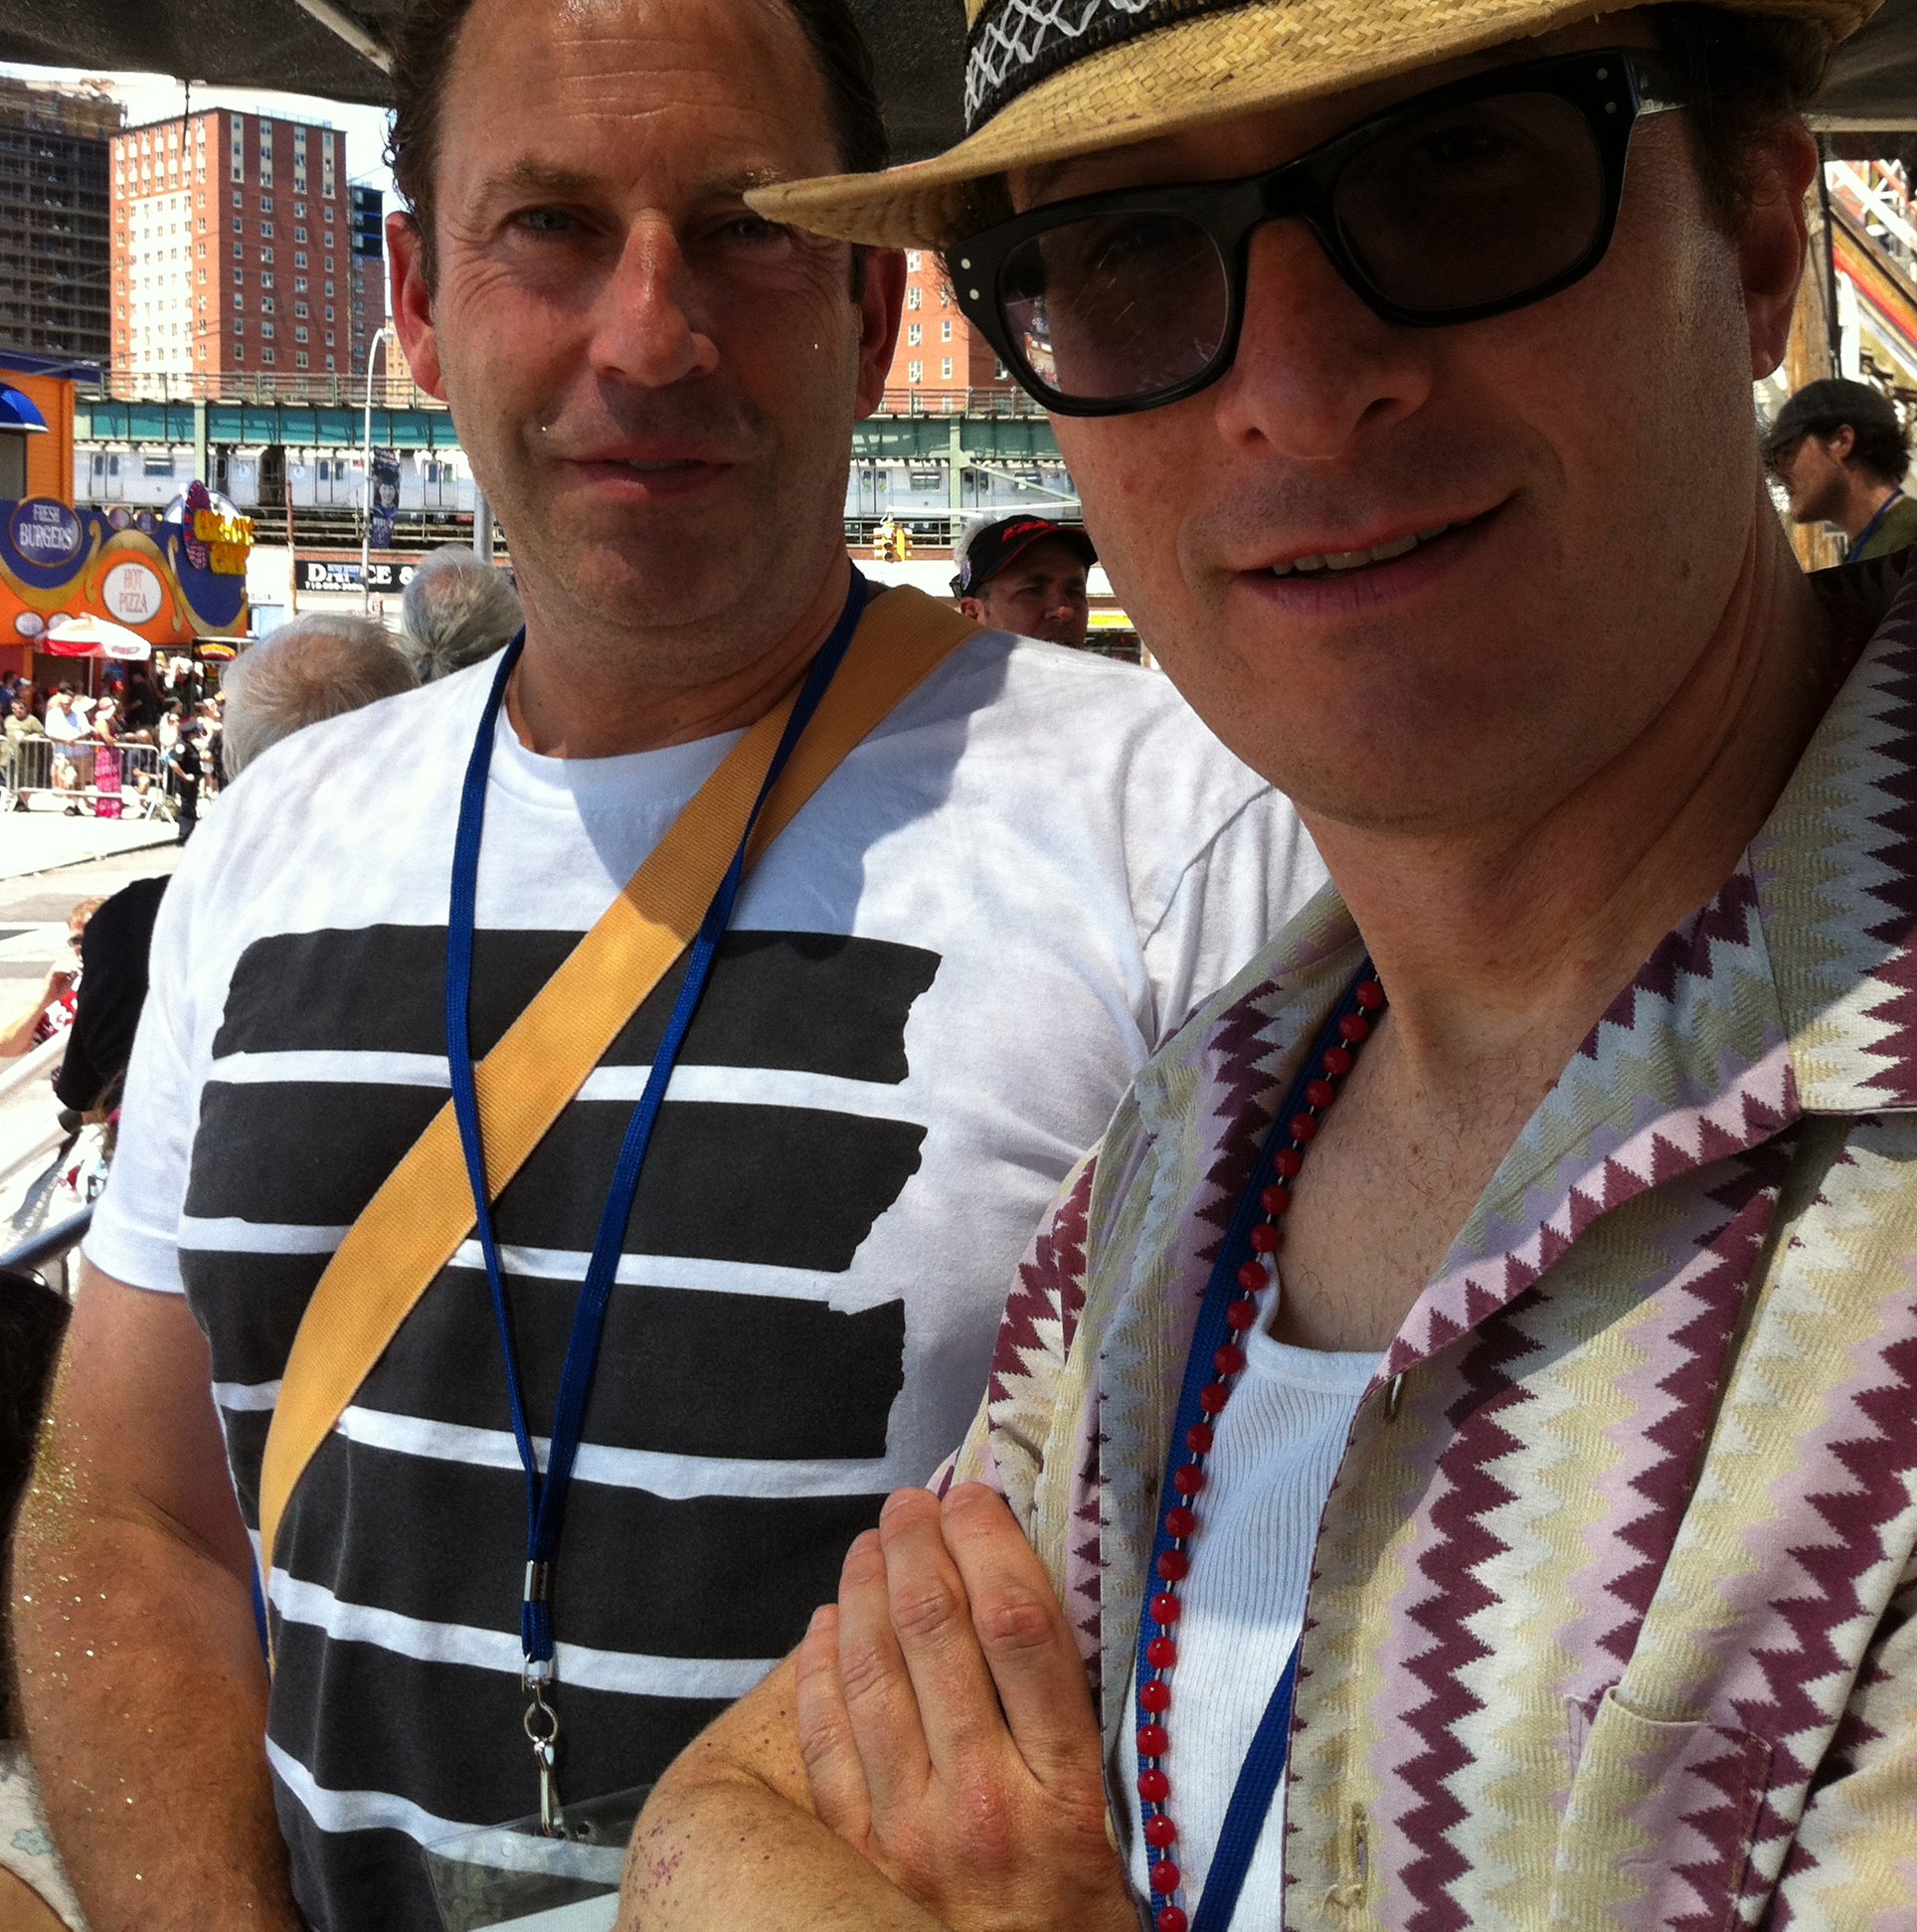 Mermaid Parade Judges, Henri Kessler & Darren Aronofsky, Coney Island 6/23/2012